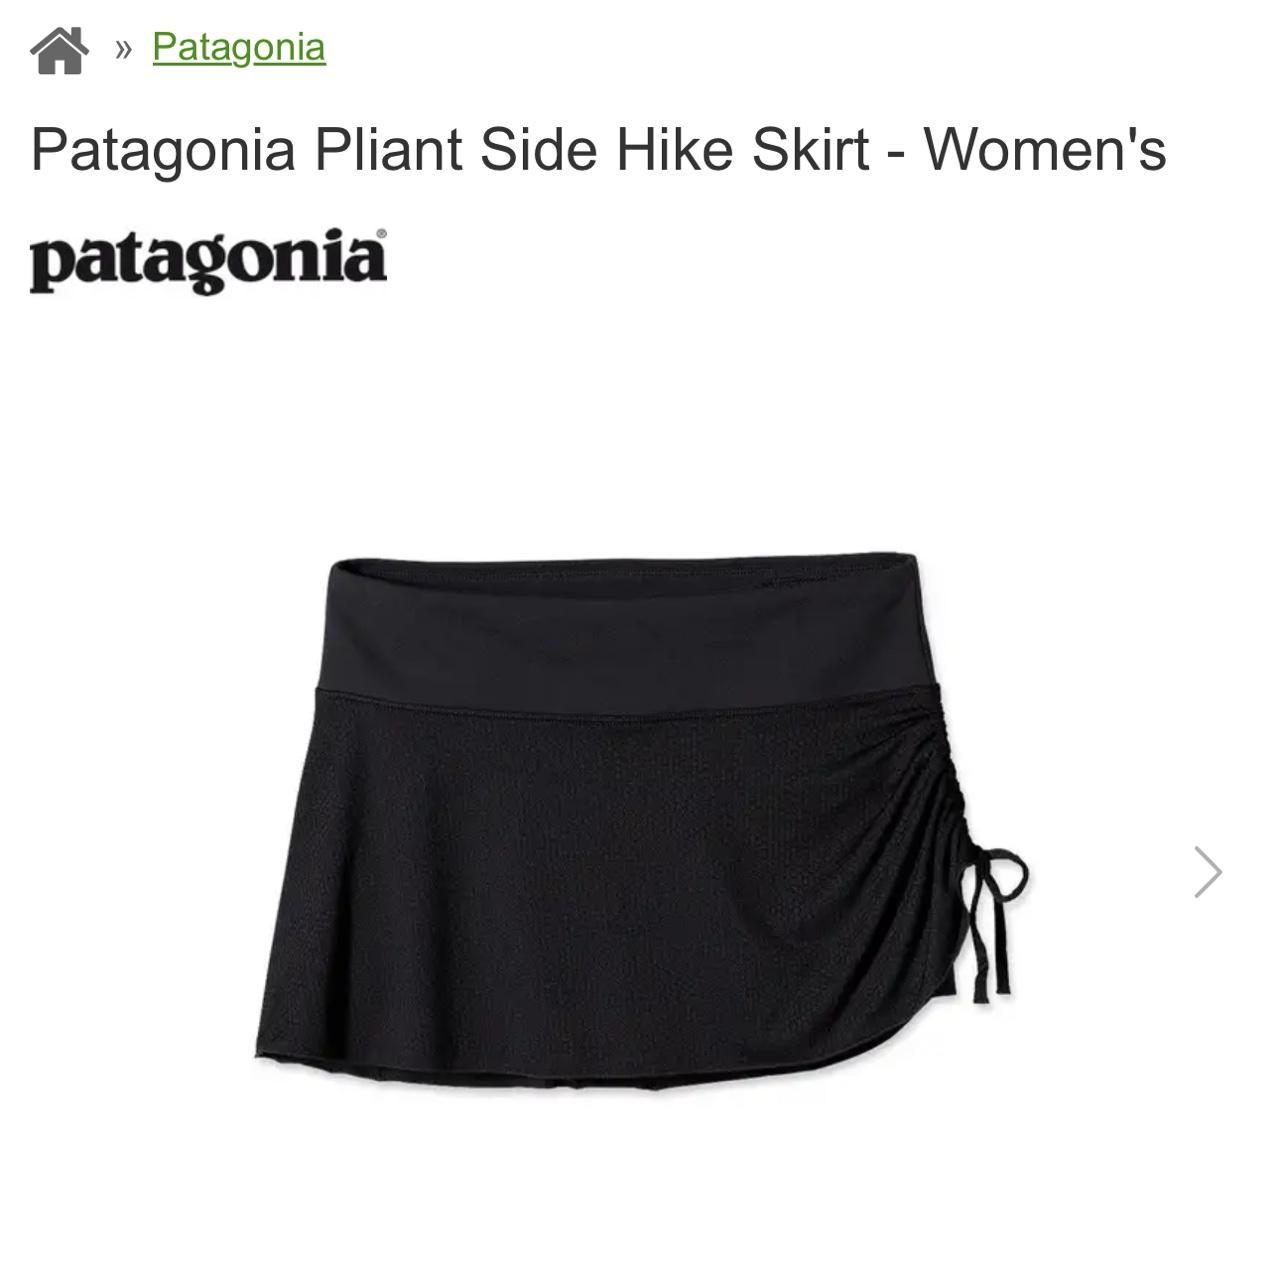 Patagonia Pliant Capri Pants - Women's.  Yoga pants women, Active outfits,  Pants for women